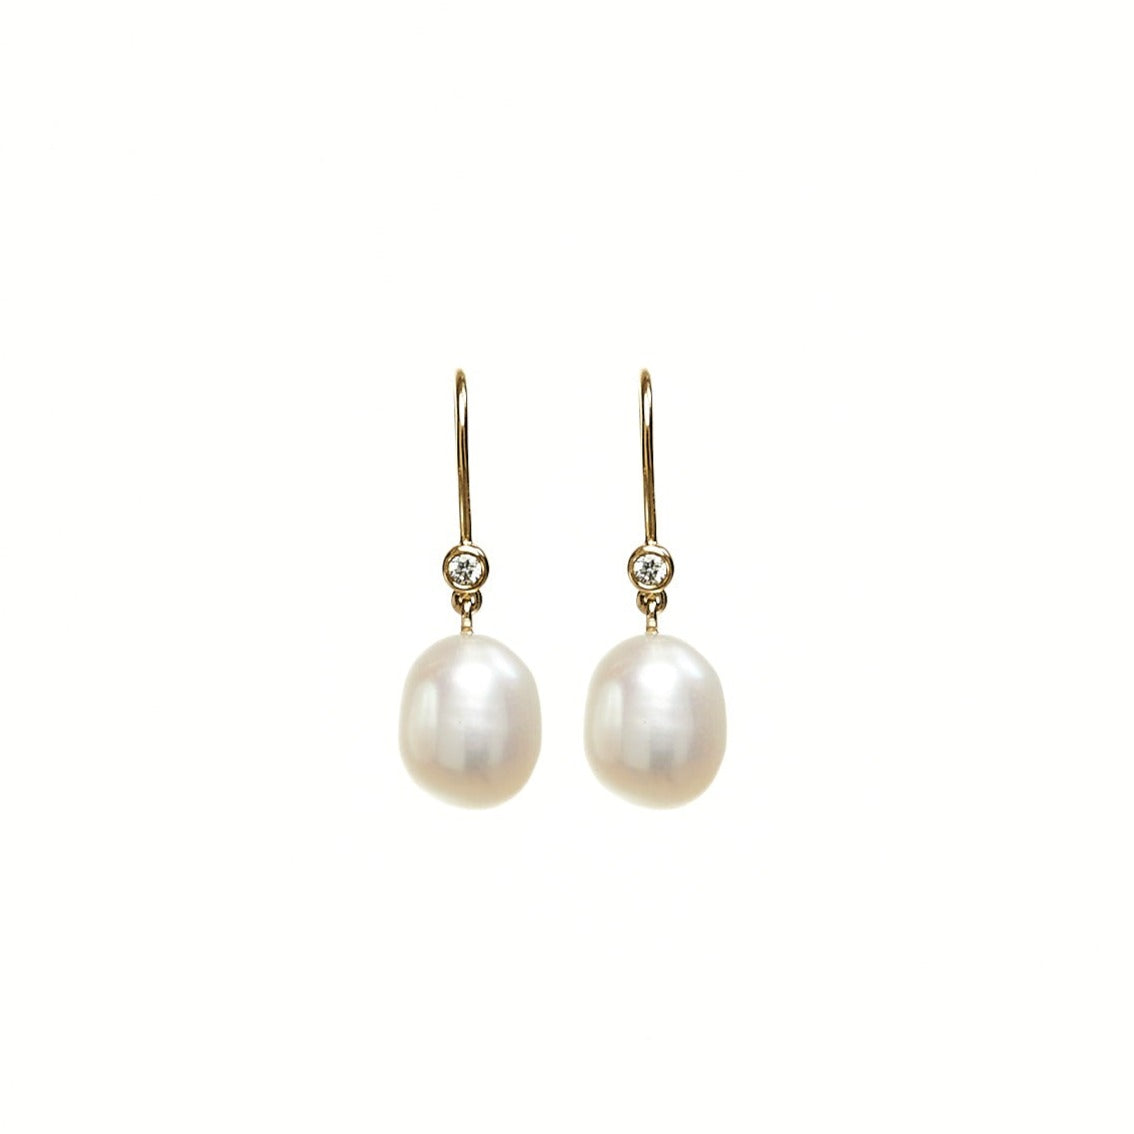 Baroque pearl and Diamond Earrings